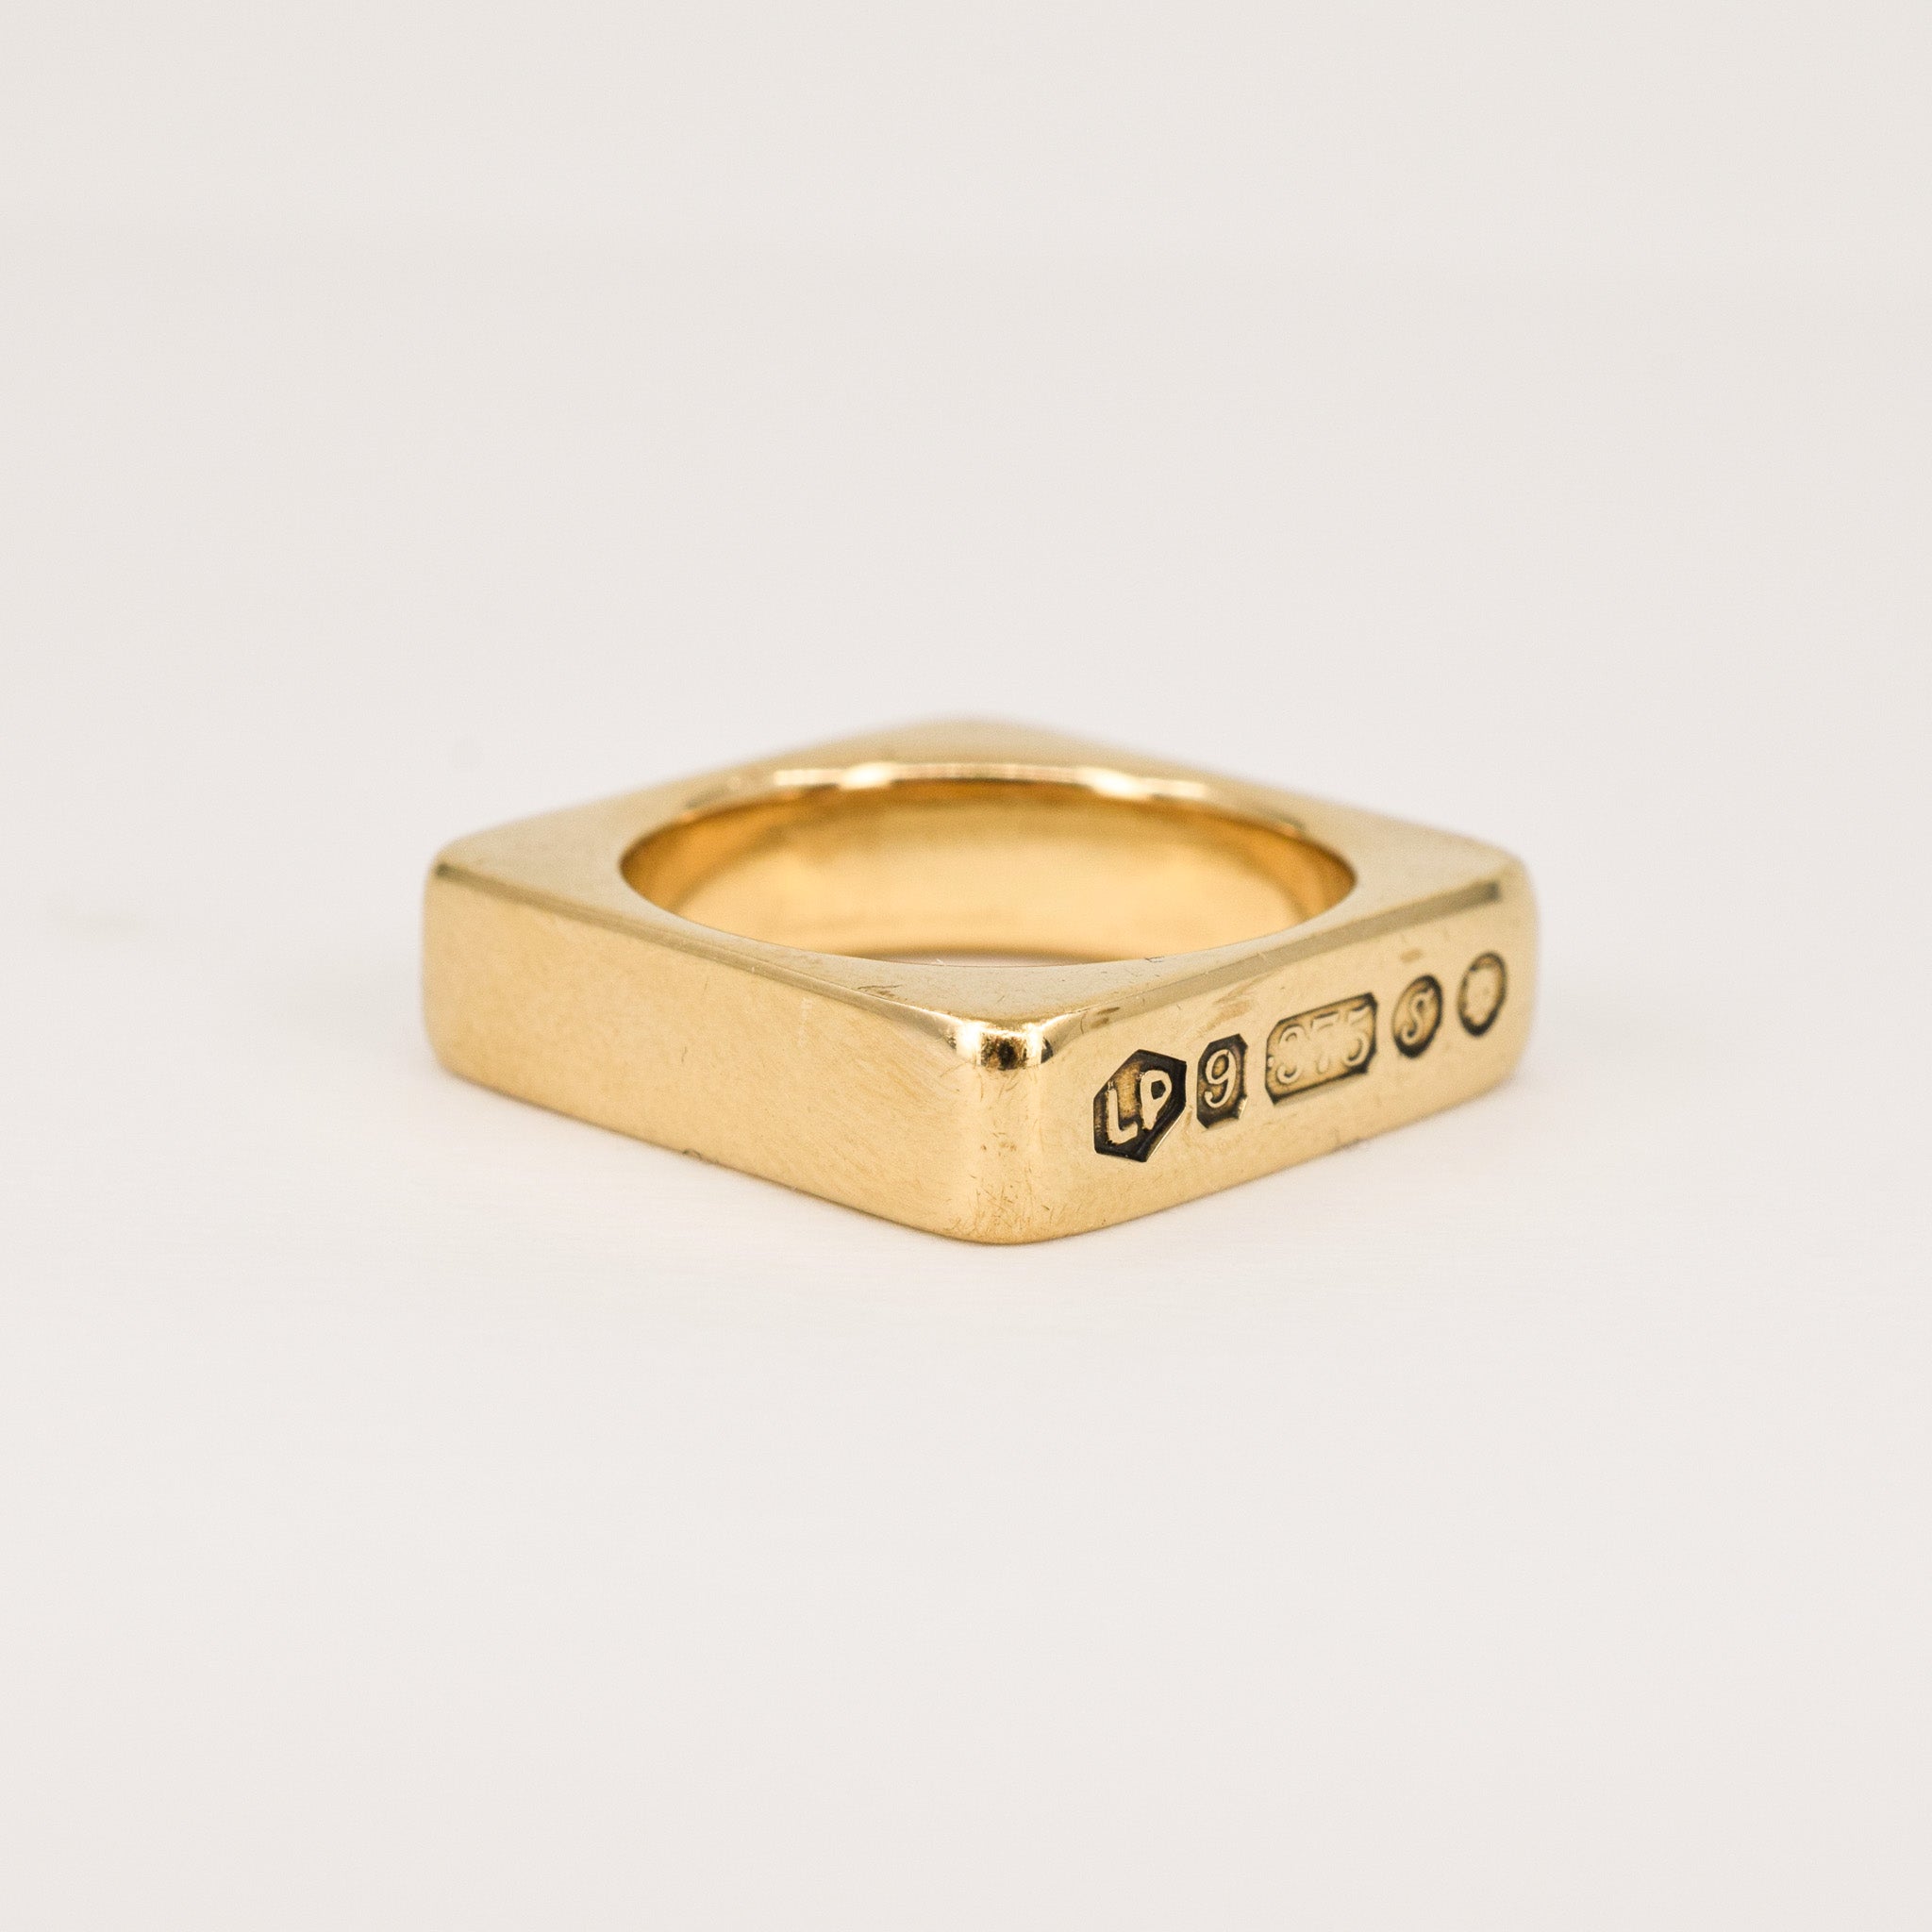 vintage gold british ring, folklor vintage jewelry canada